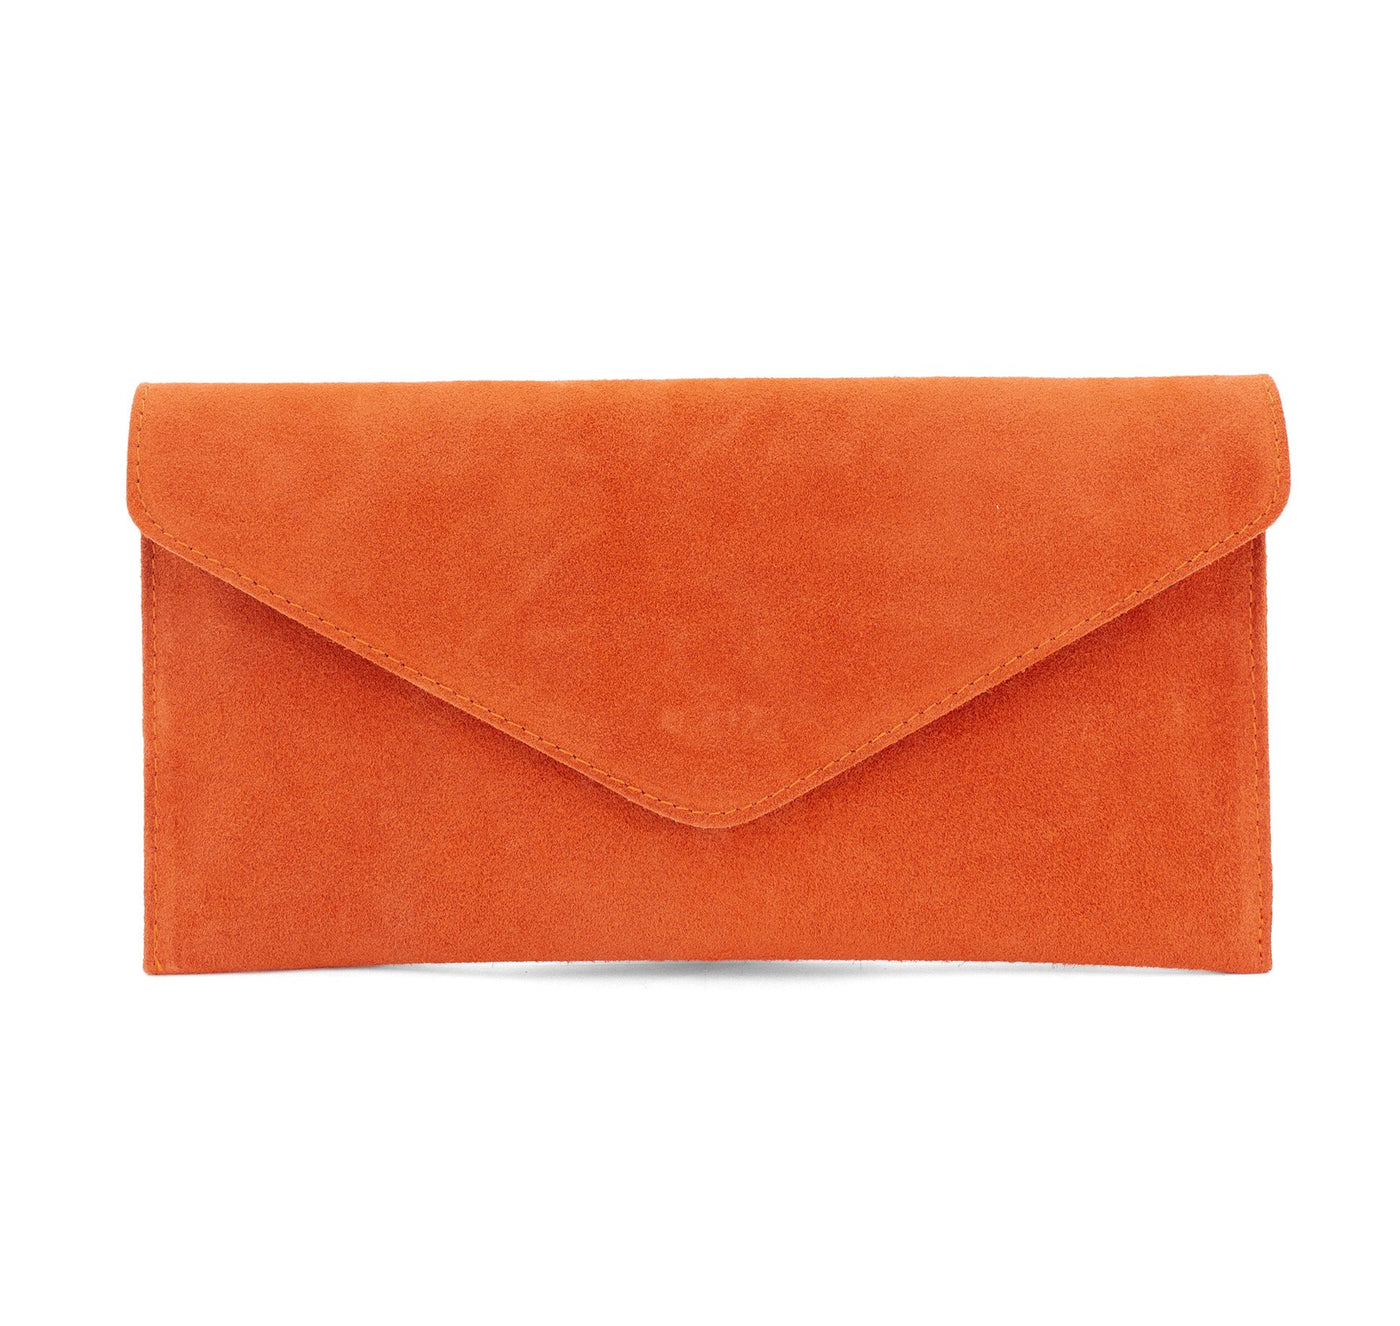 Orange Suede Leather Clutch Bag